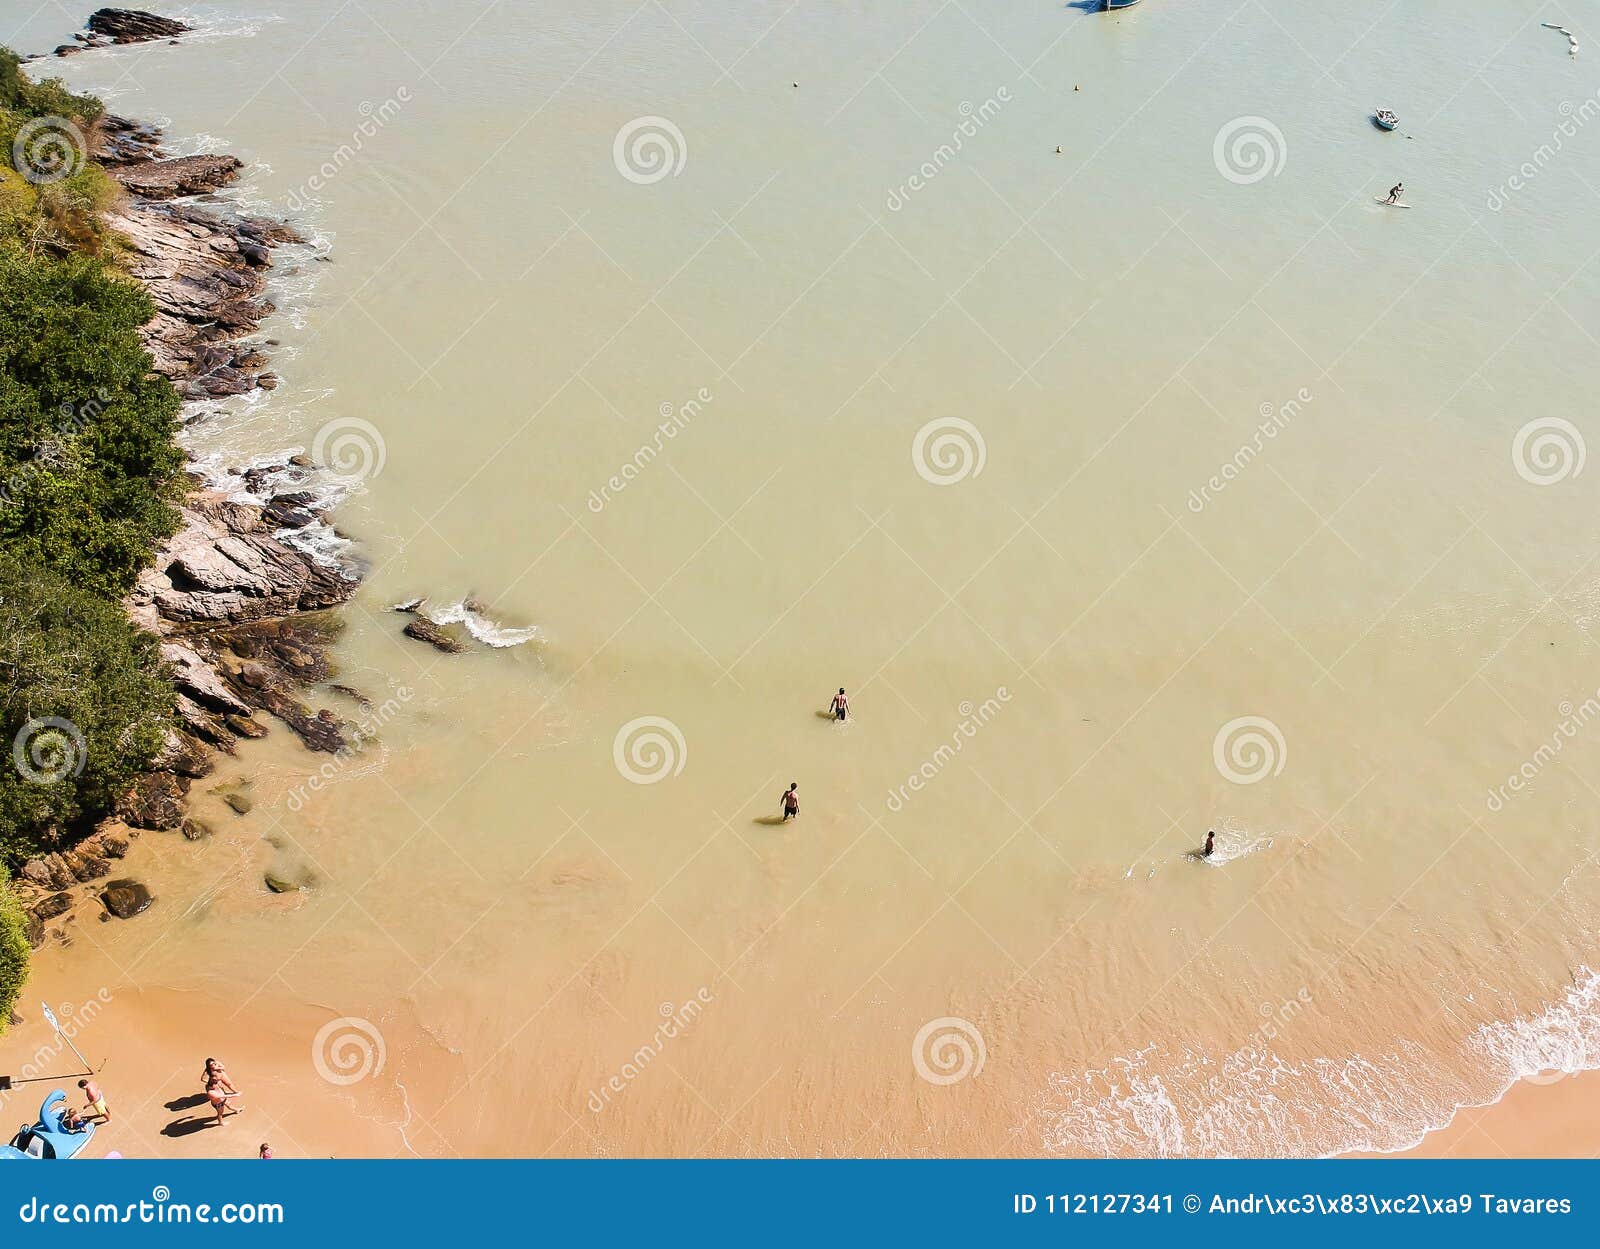 drone view of praia da ferradura, buzios, brazil